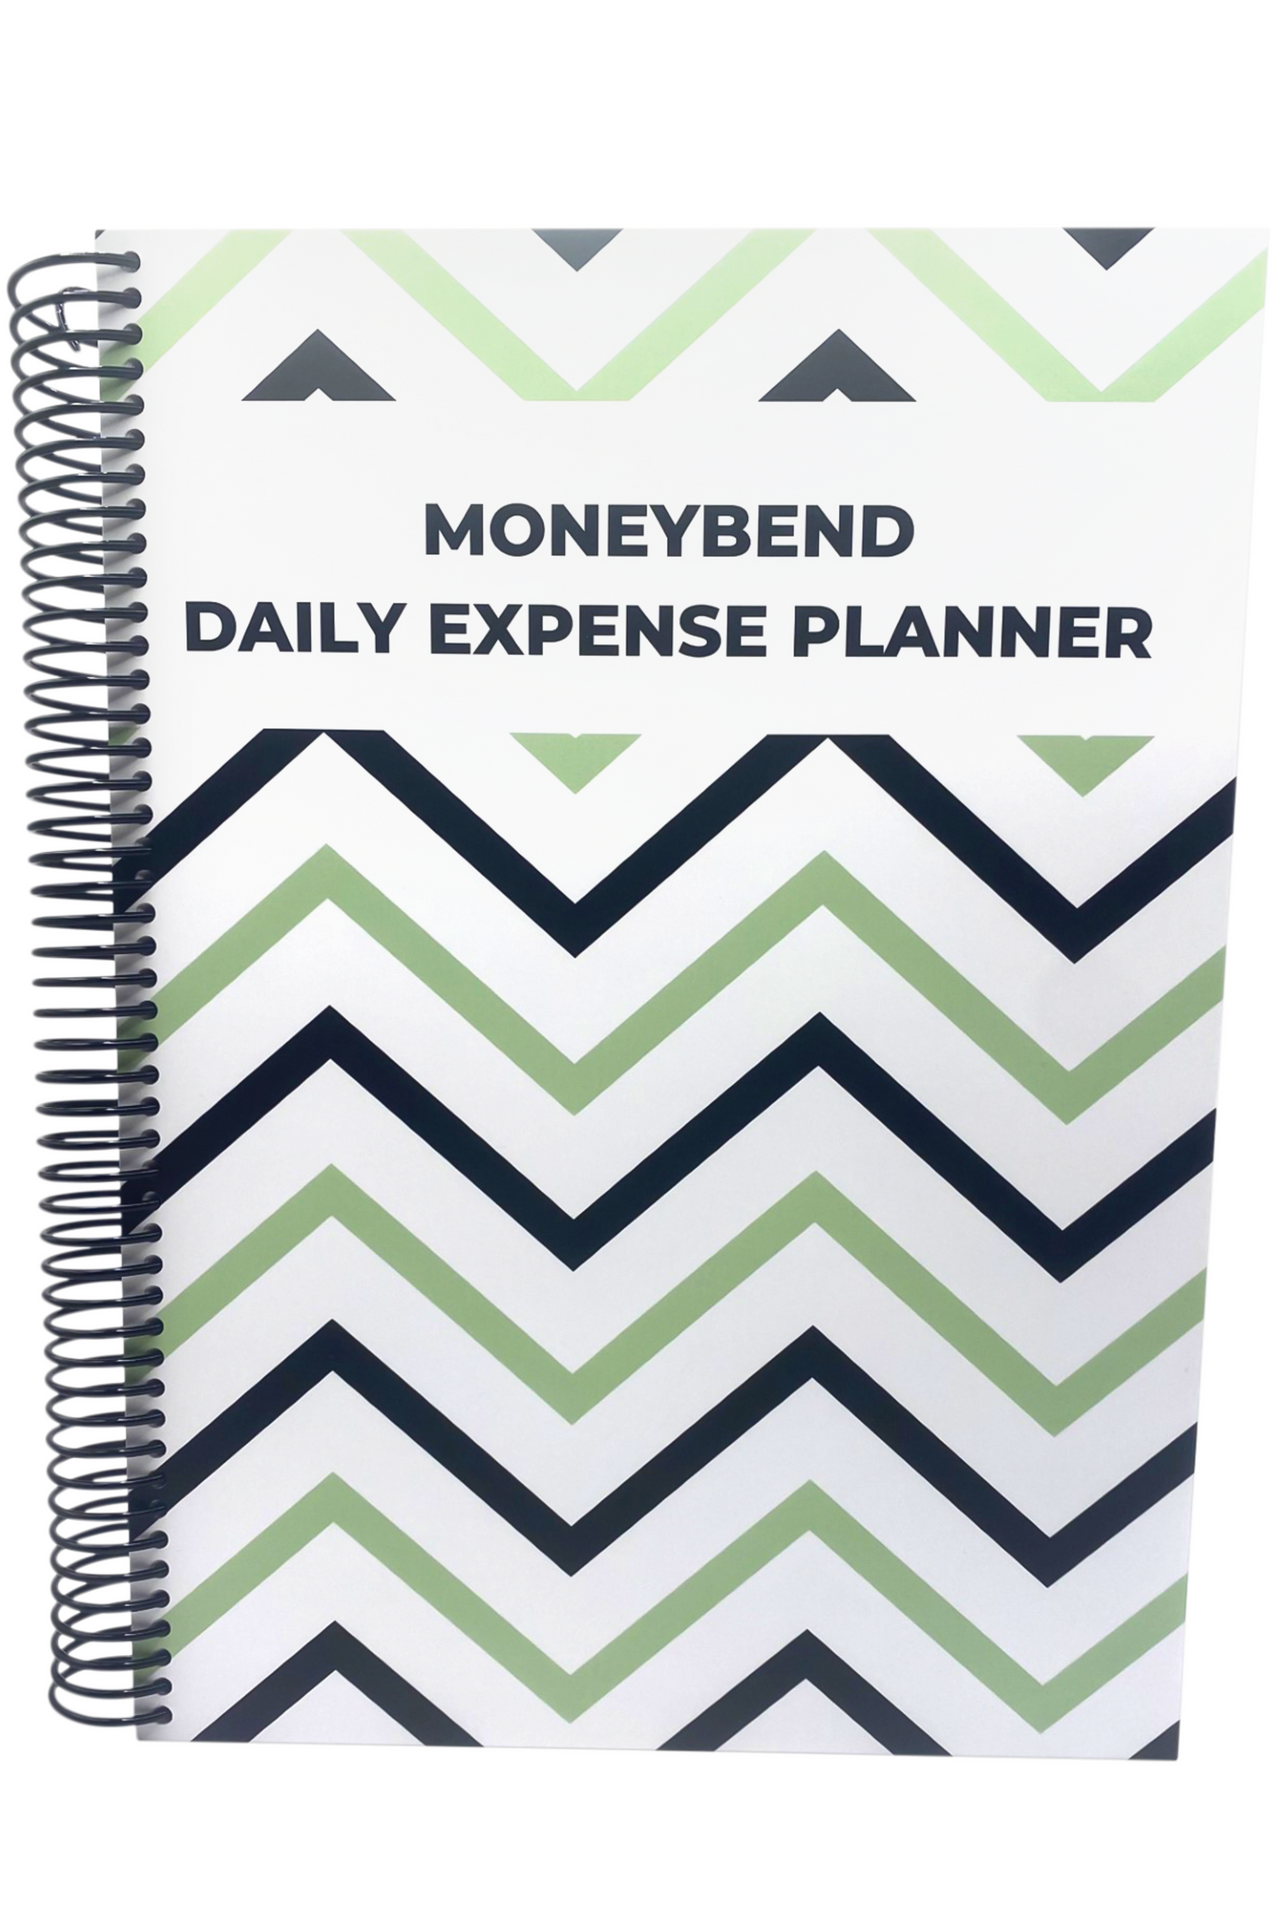 MoneyBend Daily Expense Planner